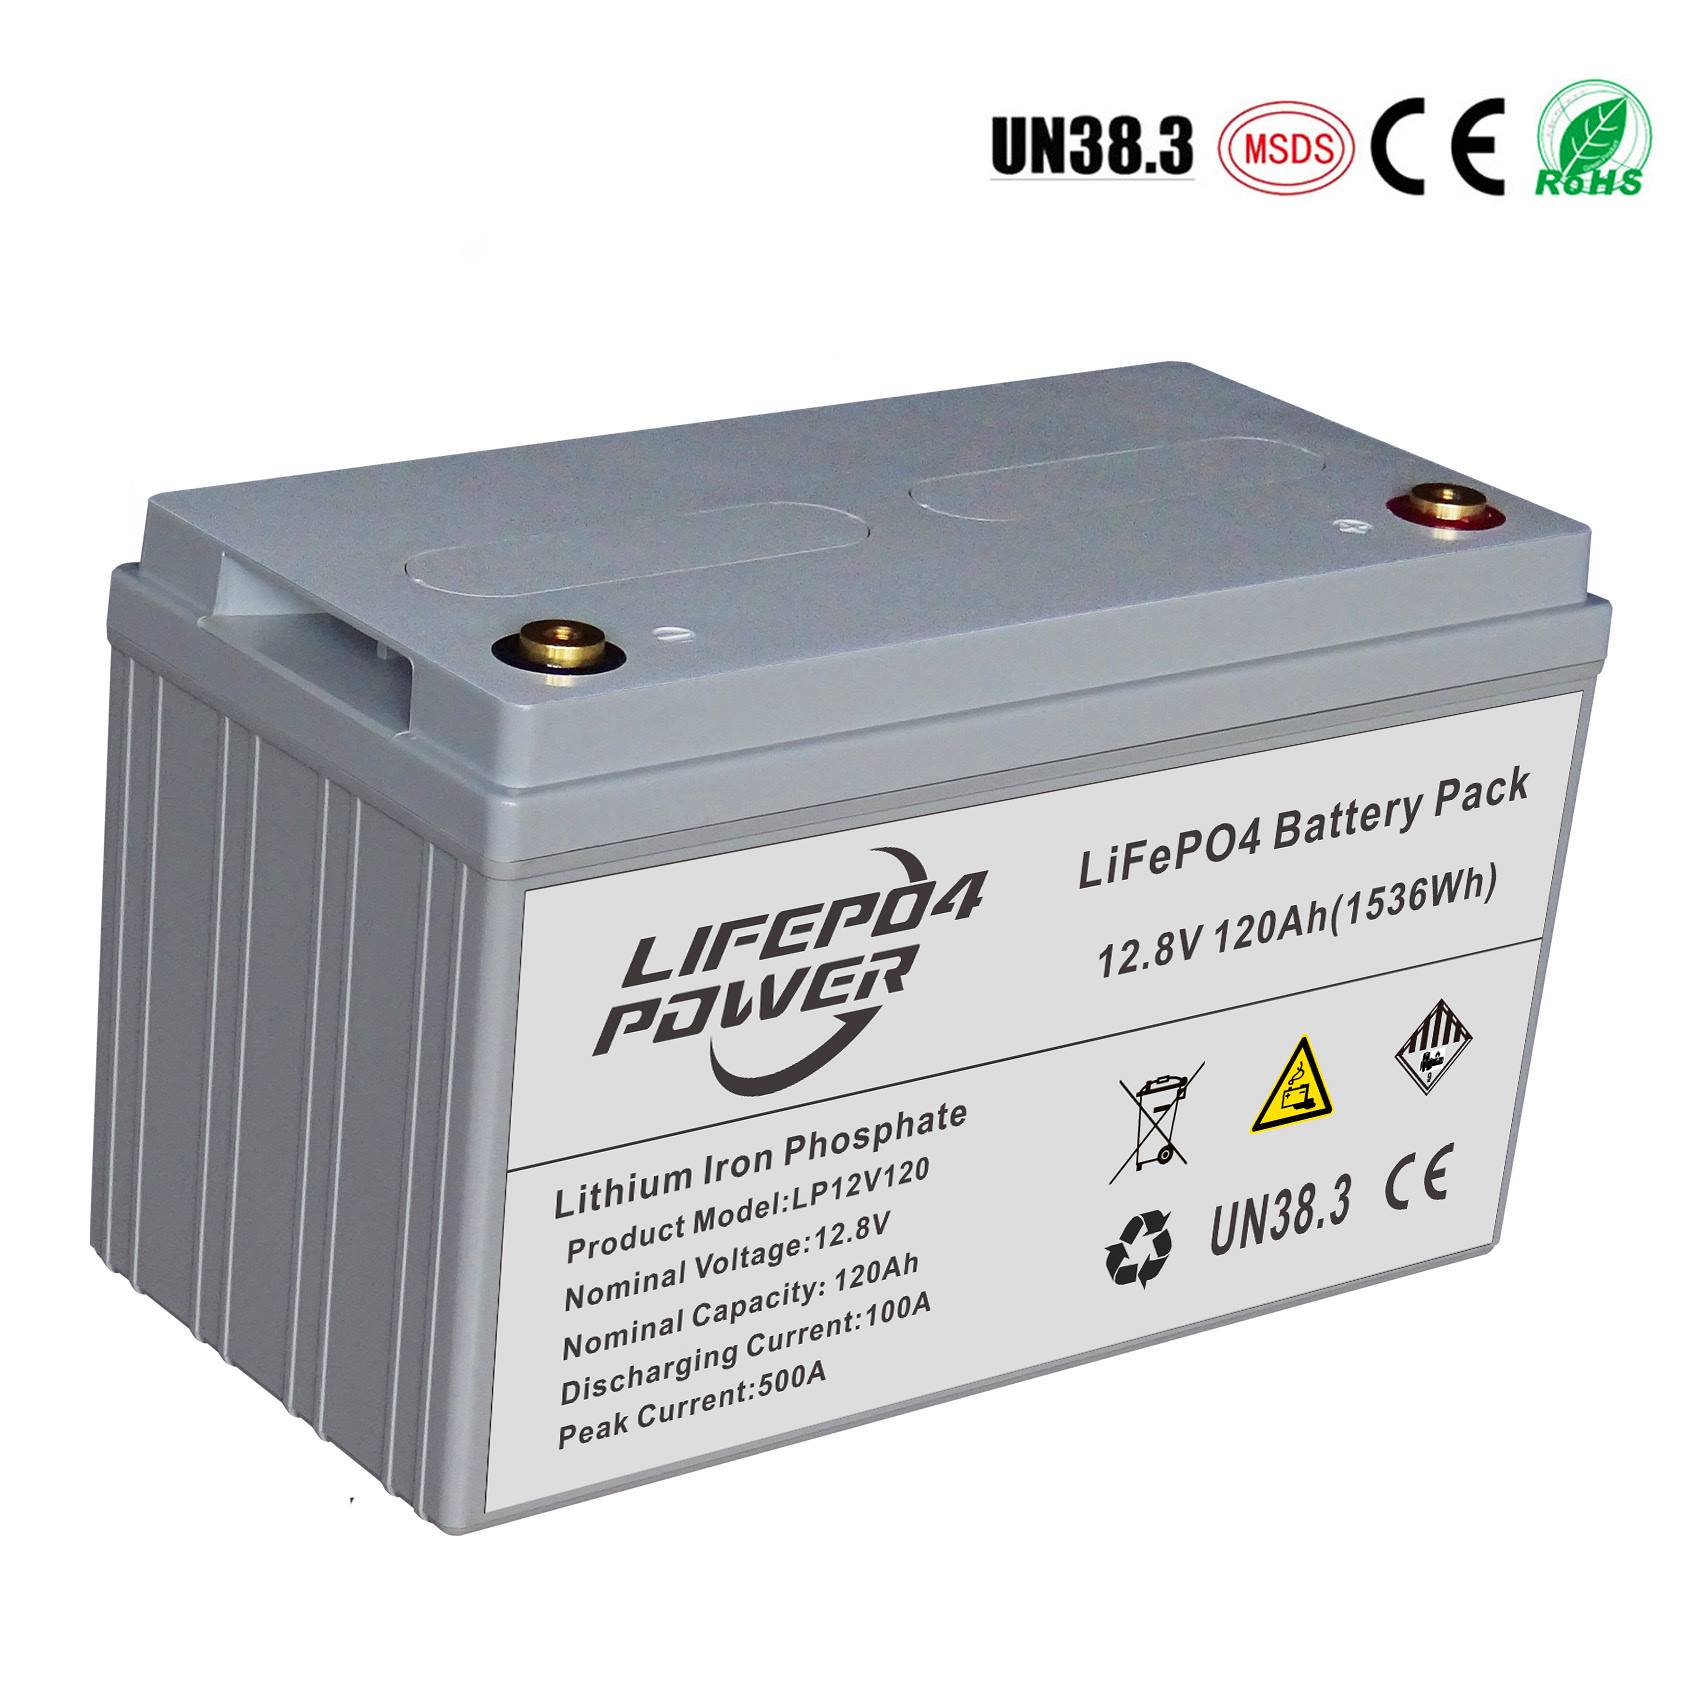 Lithium-železná fosfátová baterie 12V 120Ah